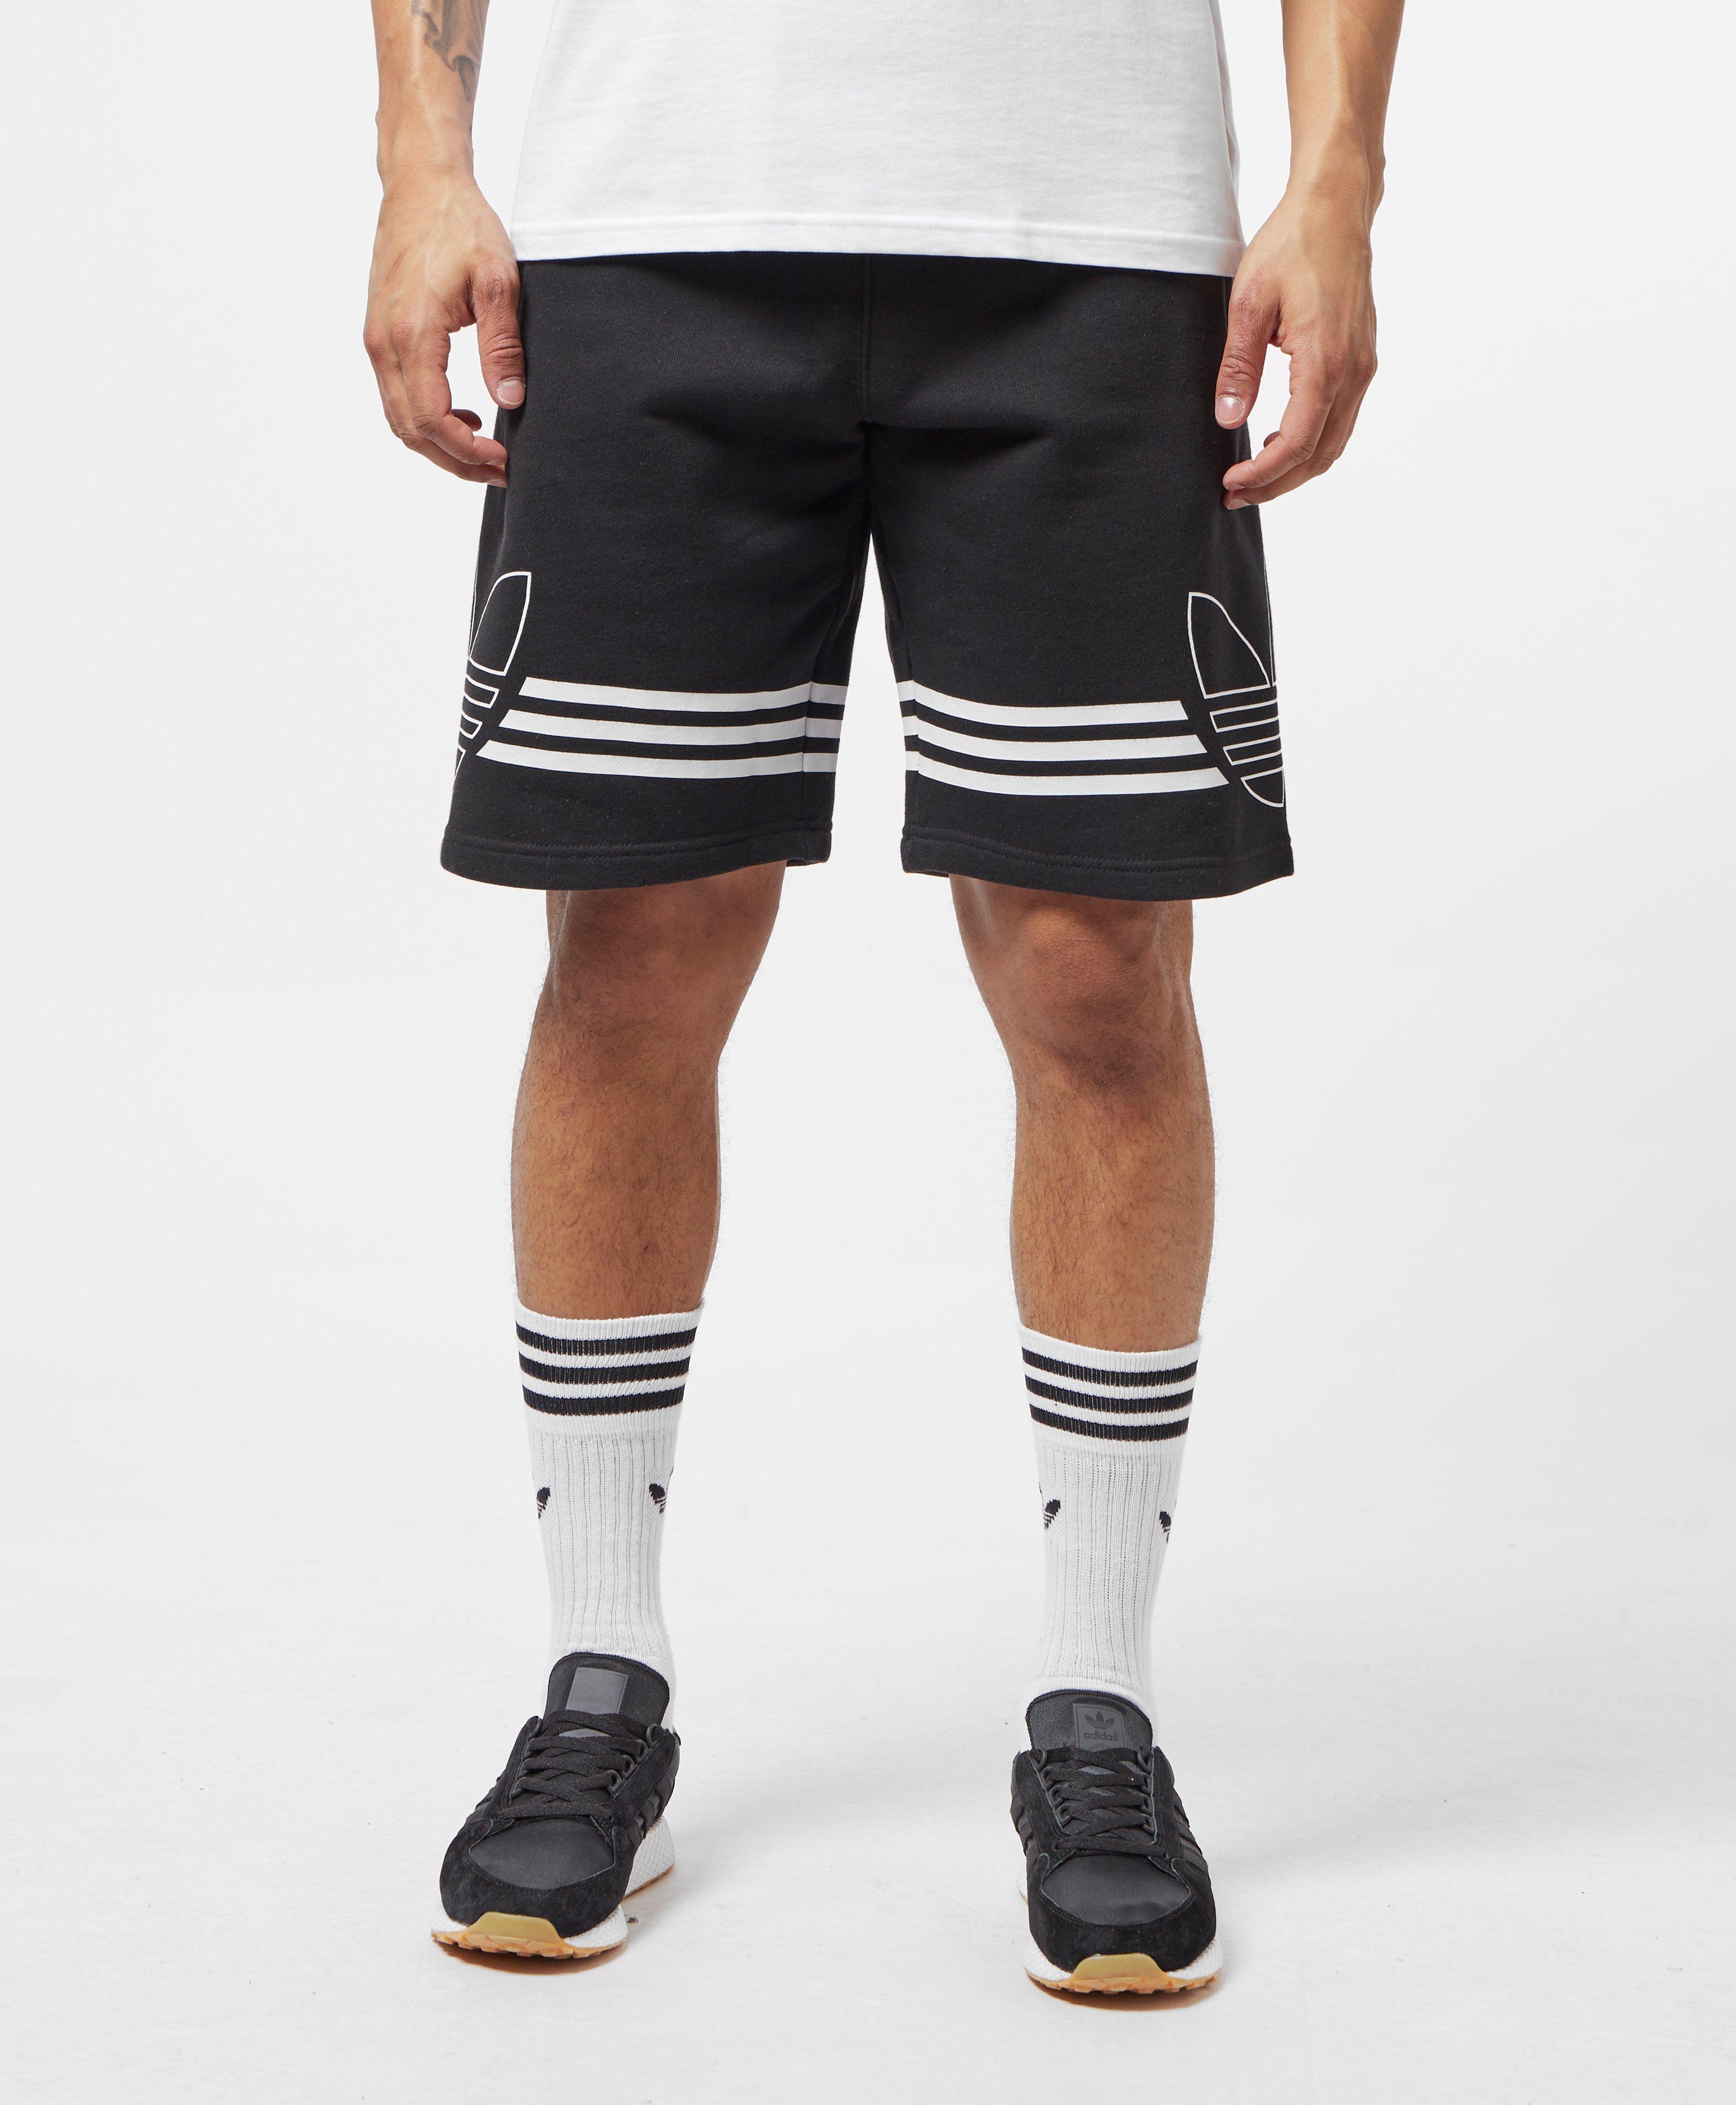 adidas originals radkin fleece shorts